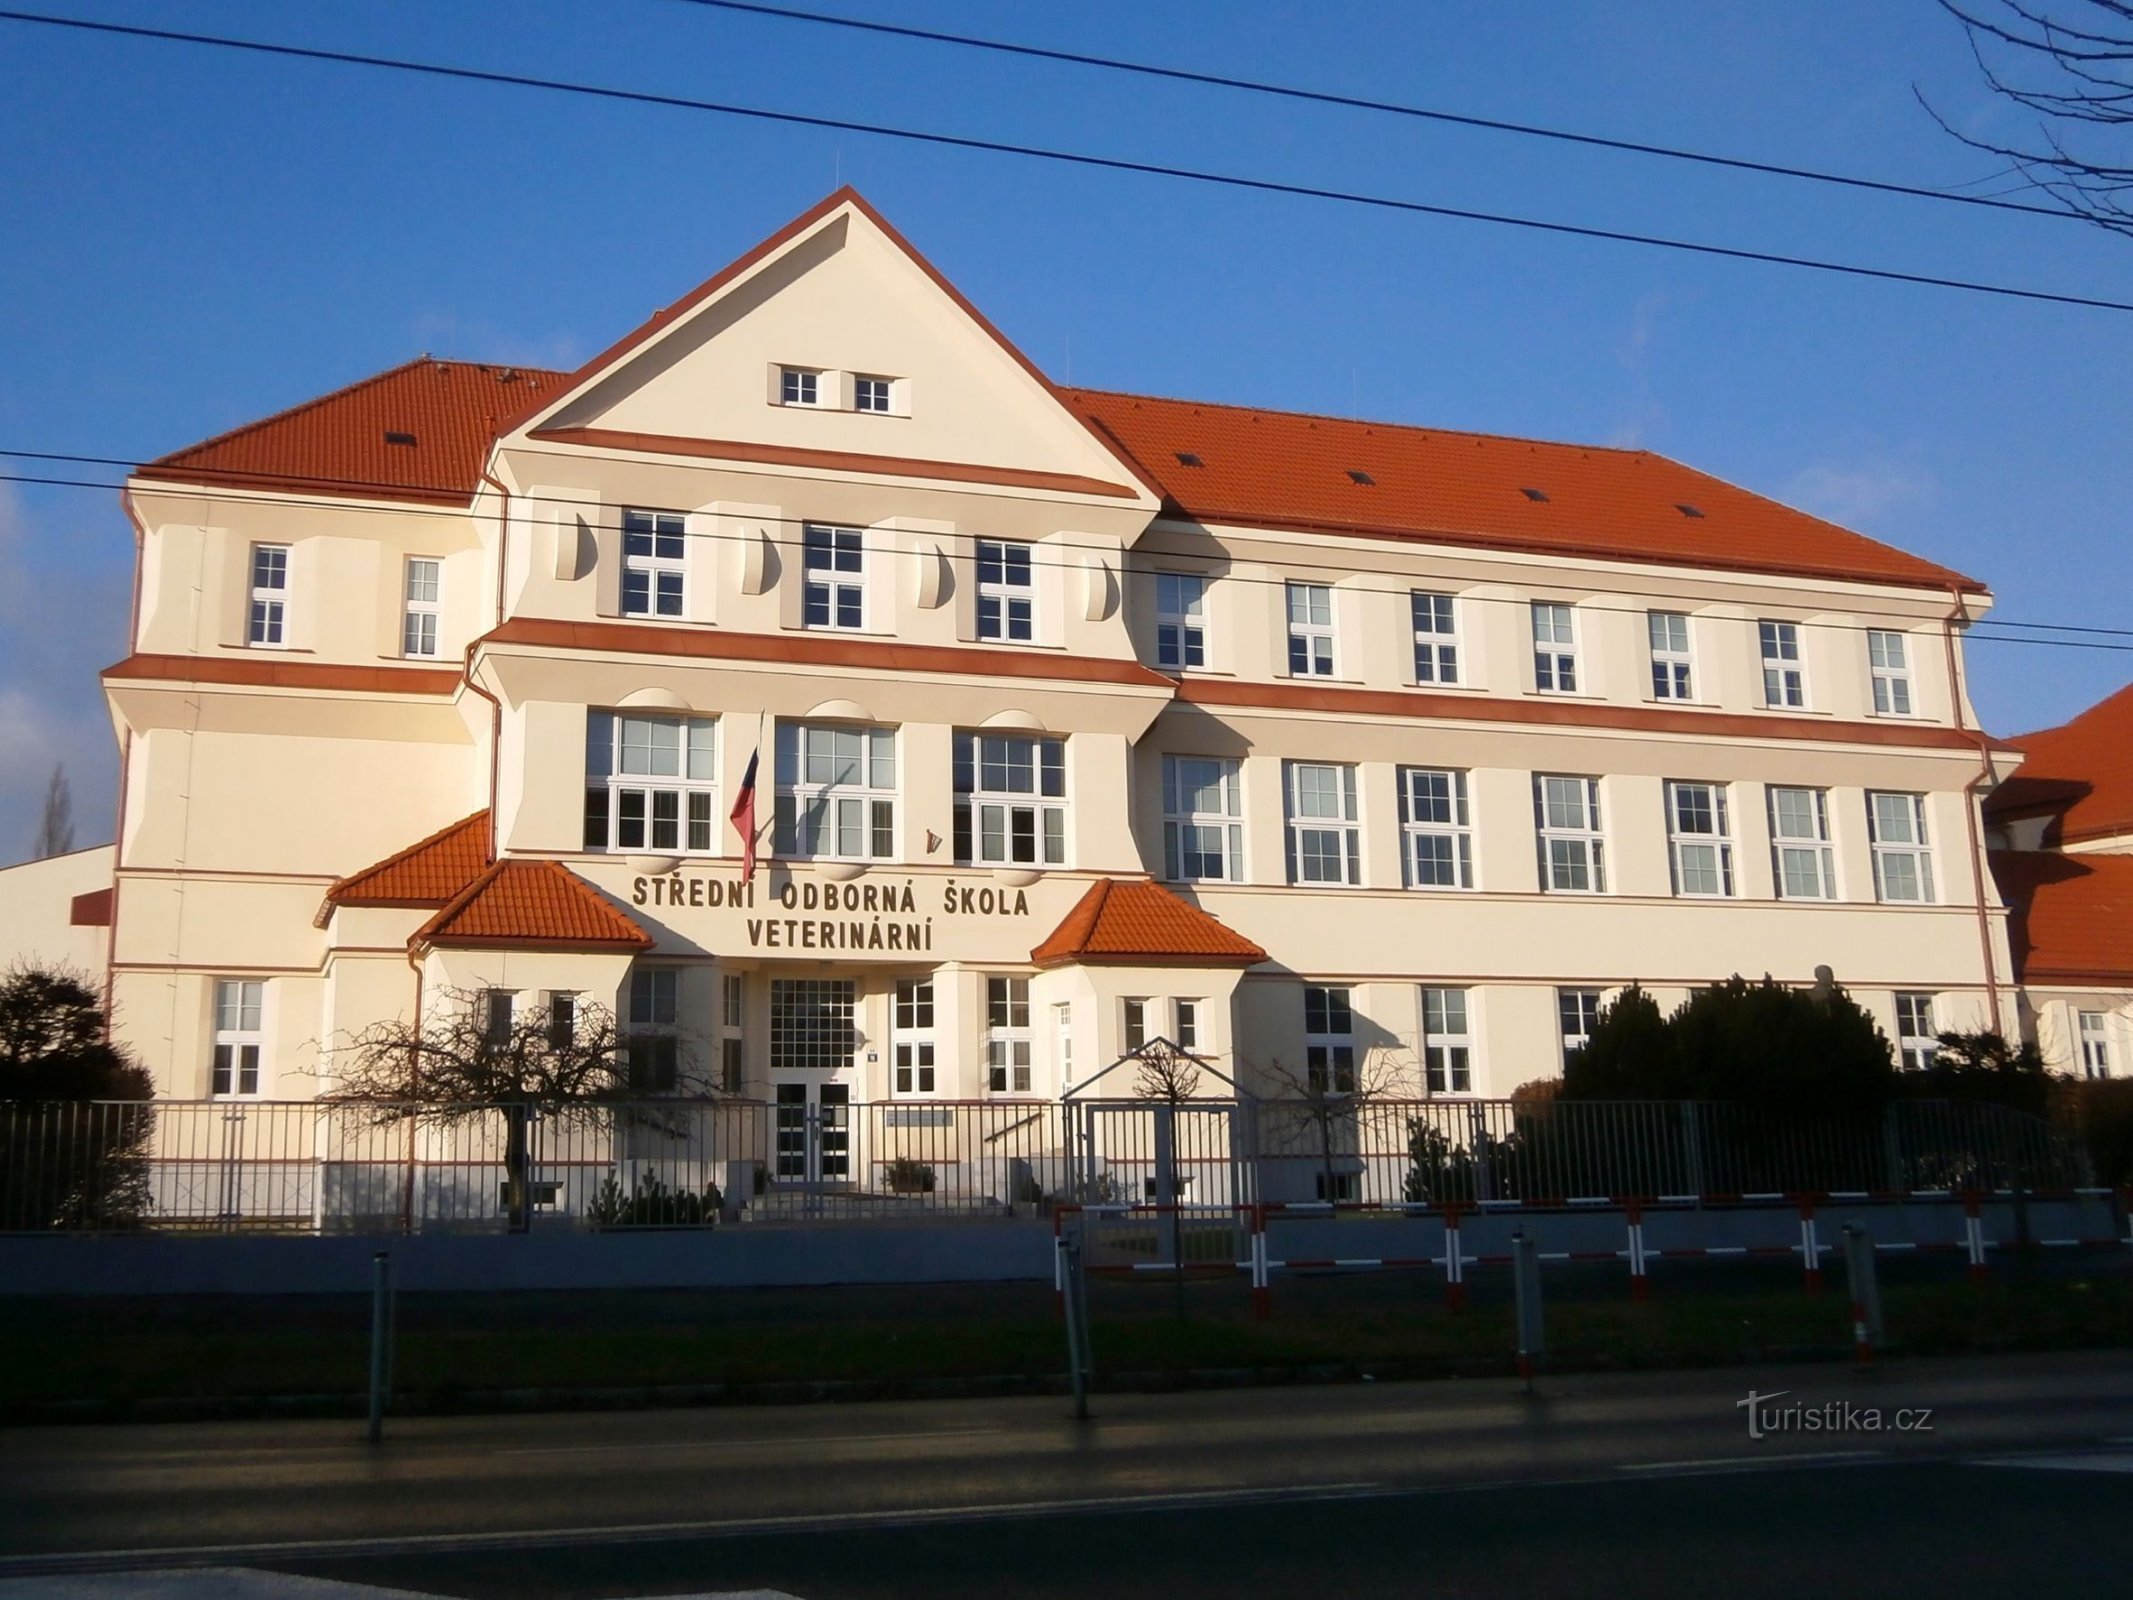 Trenutni videz stavbe Ekonomske strokovne šole v Kuklenyju (Hradec Králové, 4.1.2015. januar XNUMX)